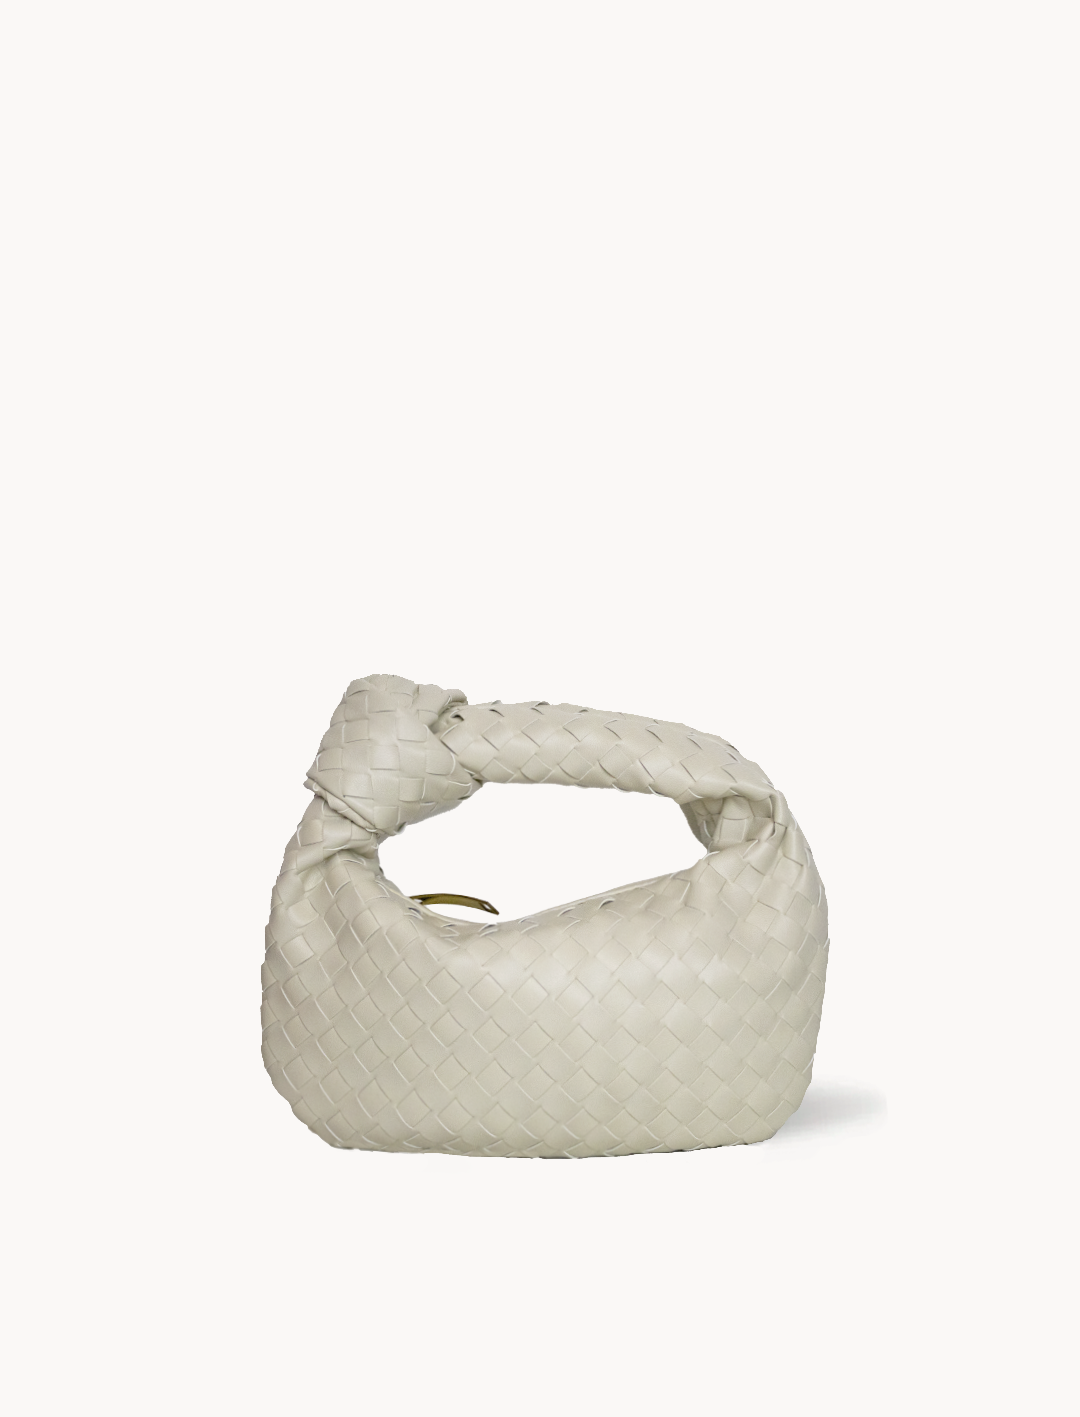 Nerys™ - Elegante Damentasche - - Bags Damen FRAUEN handbags Taschen - Concept Frankfurt